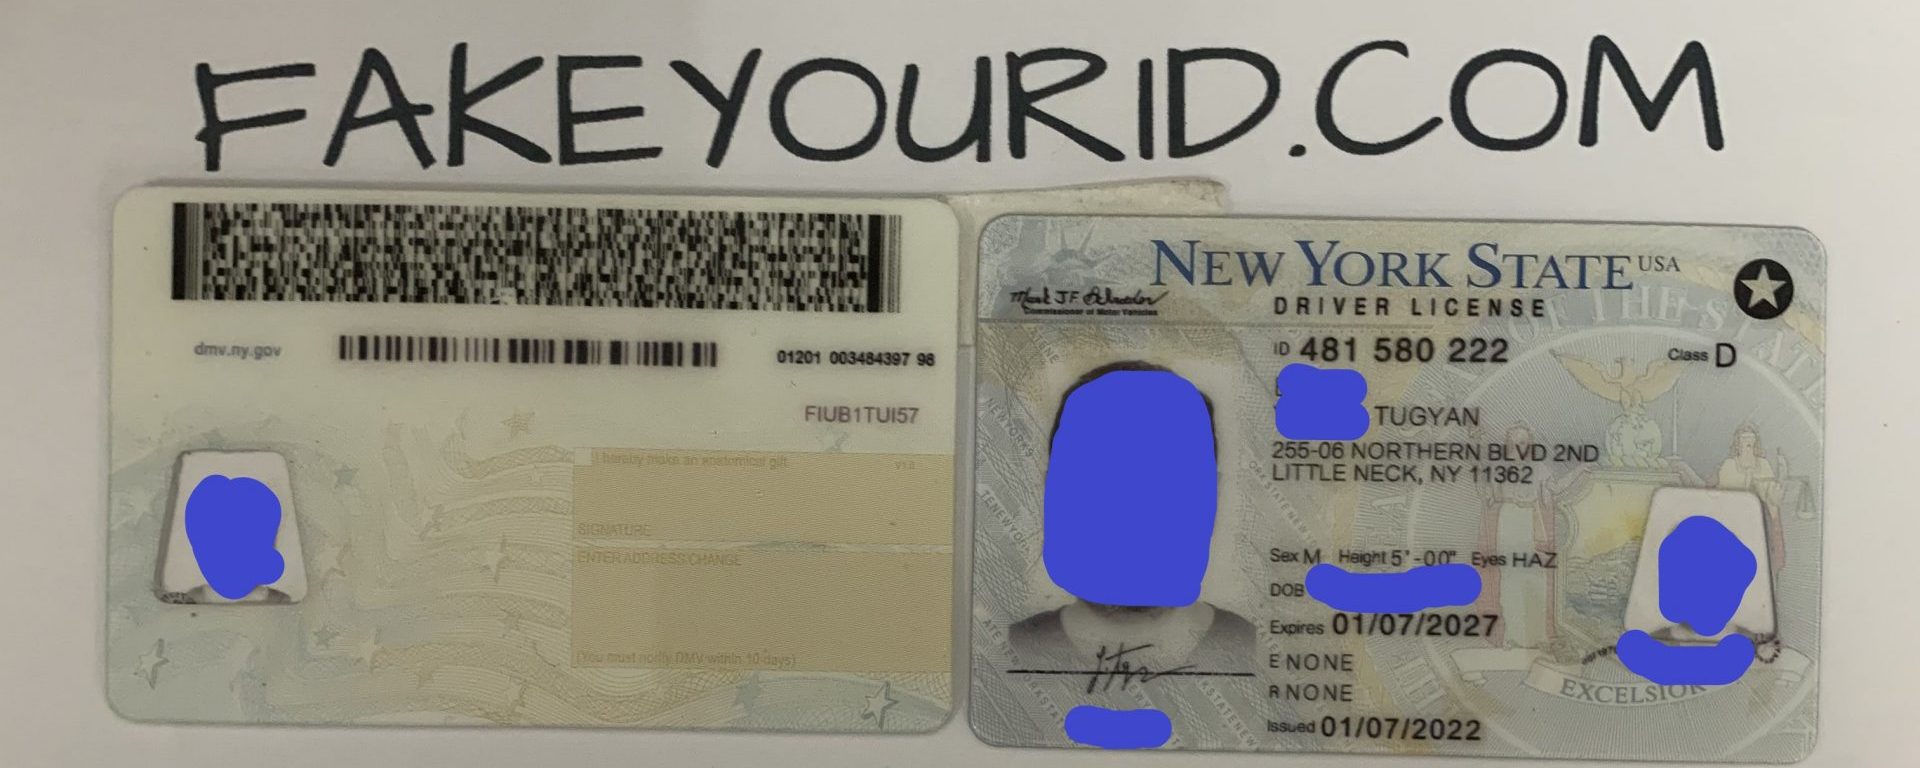 Fakeyourid Reviews - Buy Scannable Fake ID - We Make Premium Fake IDs